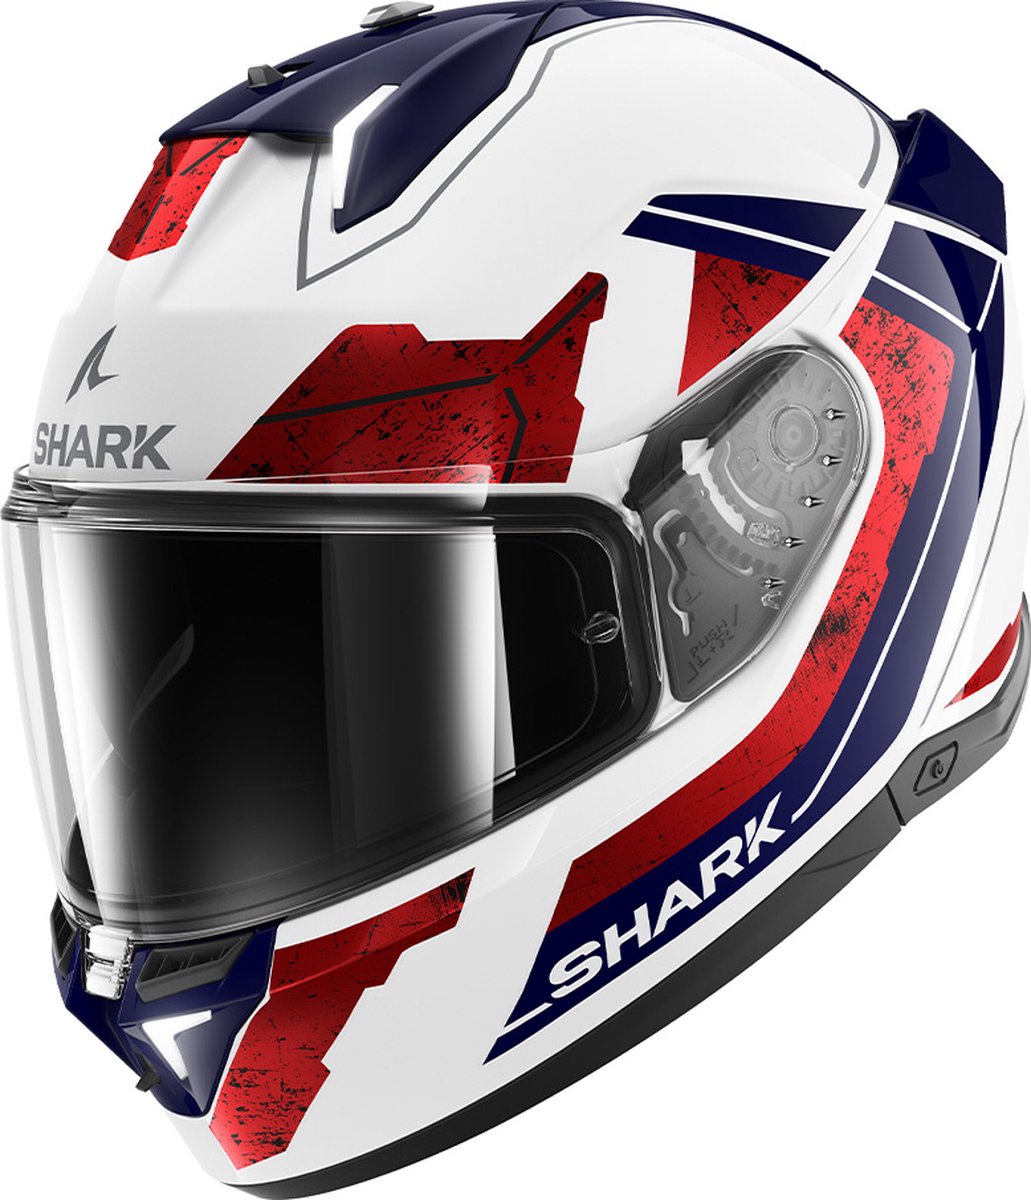 Shark Skwal i3 Rhad White Chrom Red WUR XL - Maat XL - Helm